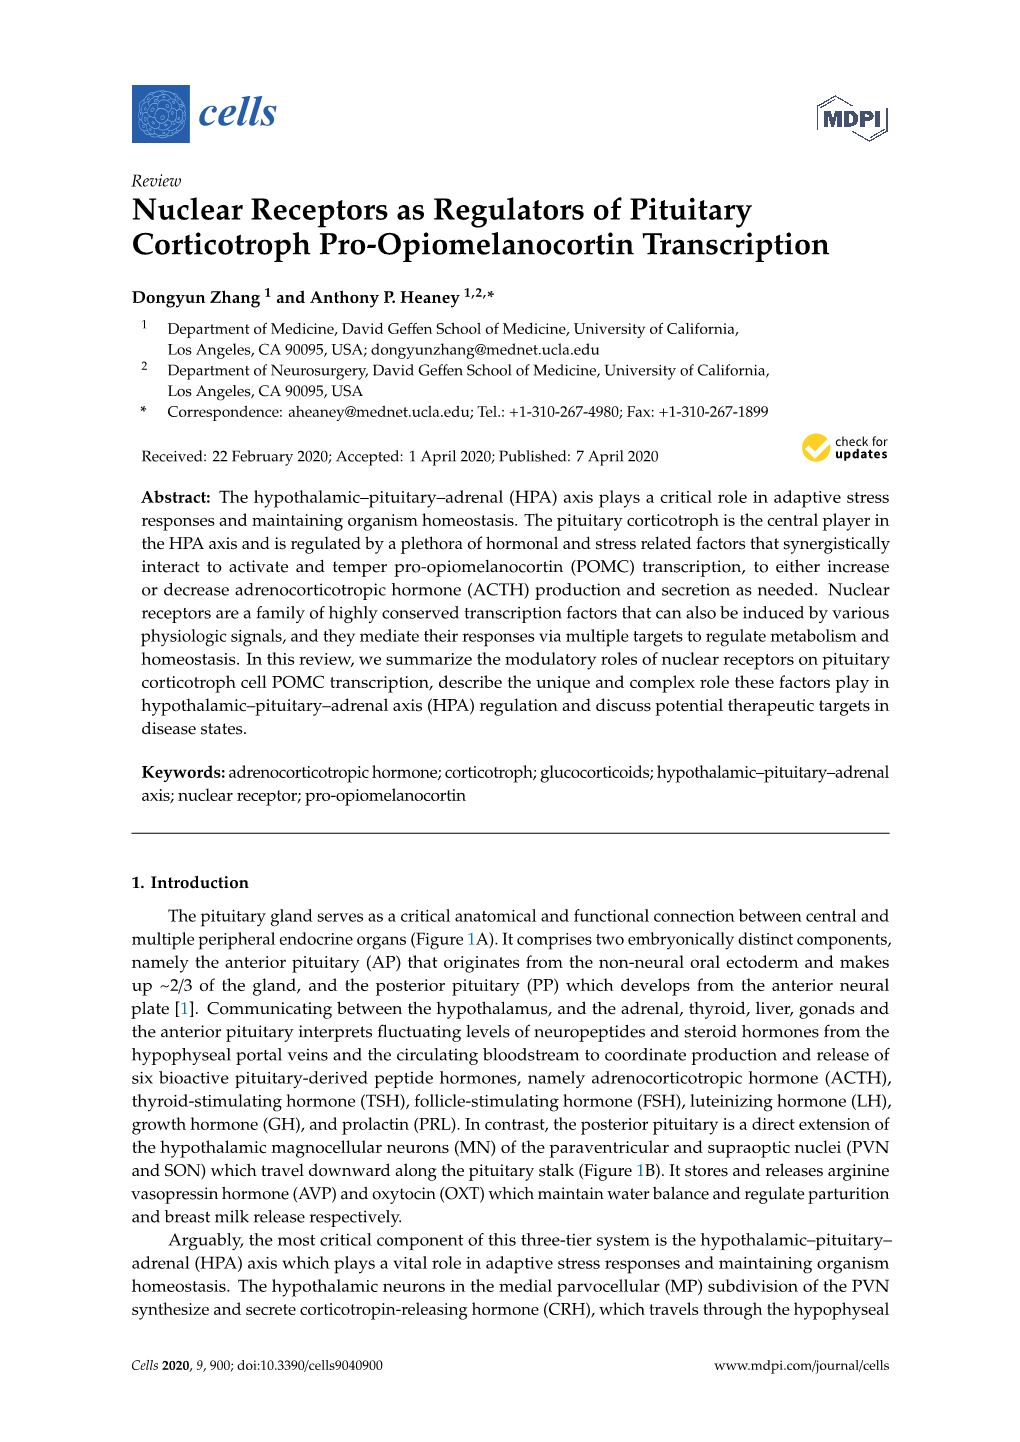 Nuclear Receptors As Regulators of Pituitary Corticotroph Pro-Opiomelanocortin Transcription